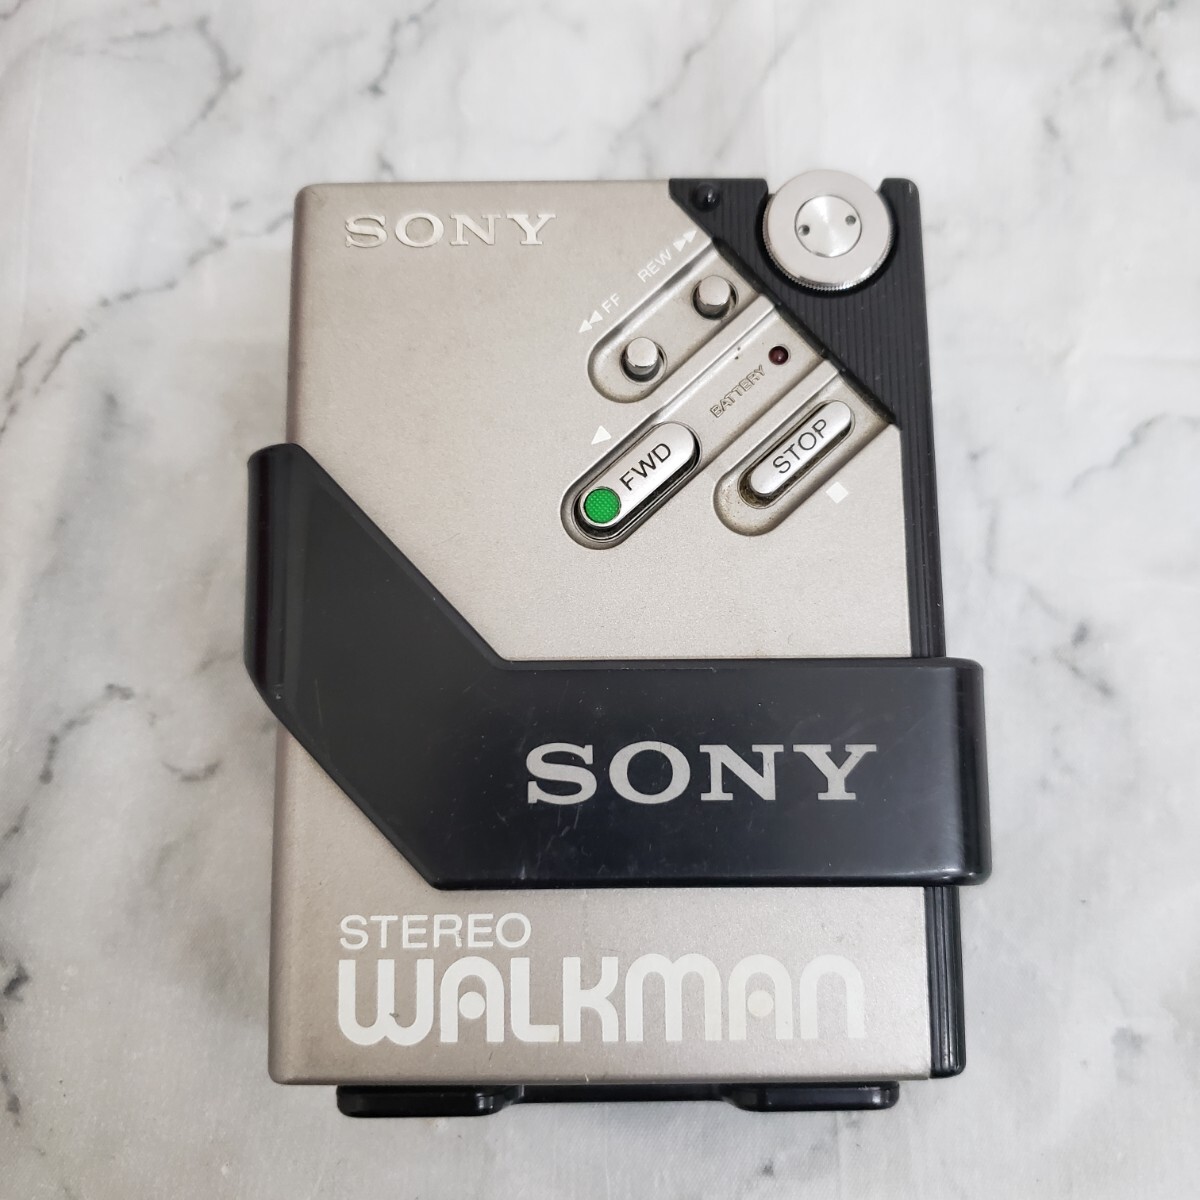 SONY Sony portable cassette player WALKMAN WM-2 case attaching Junk 